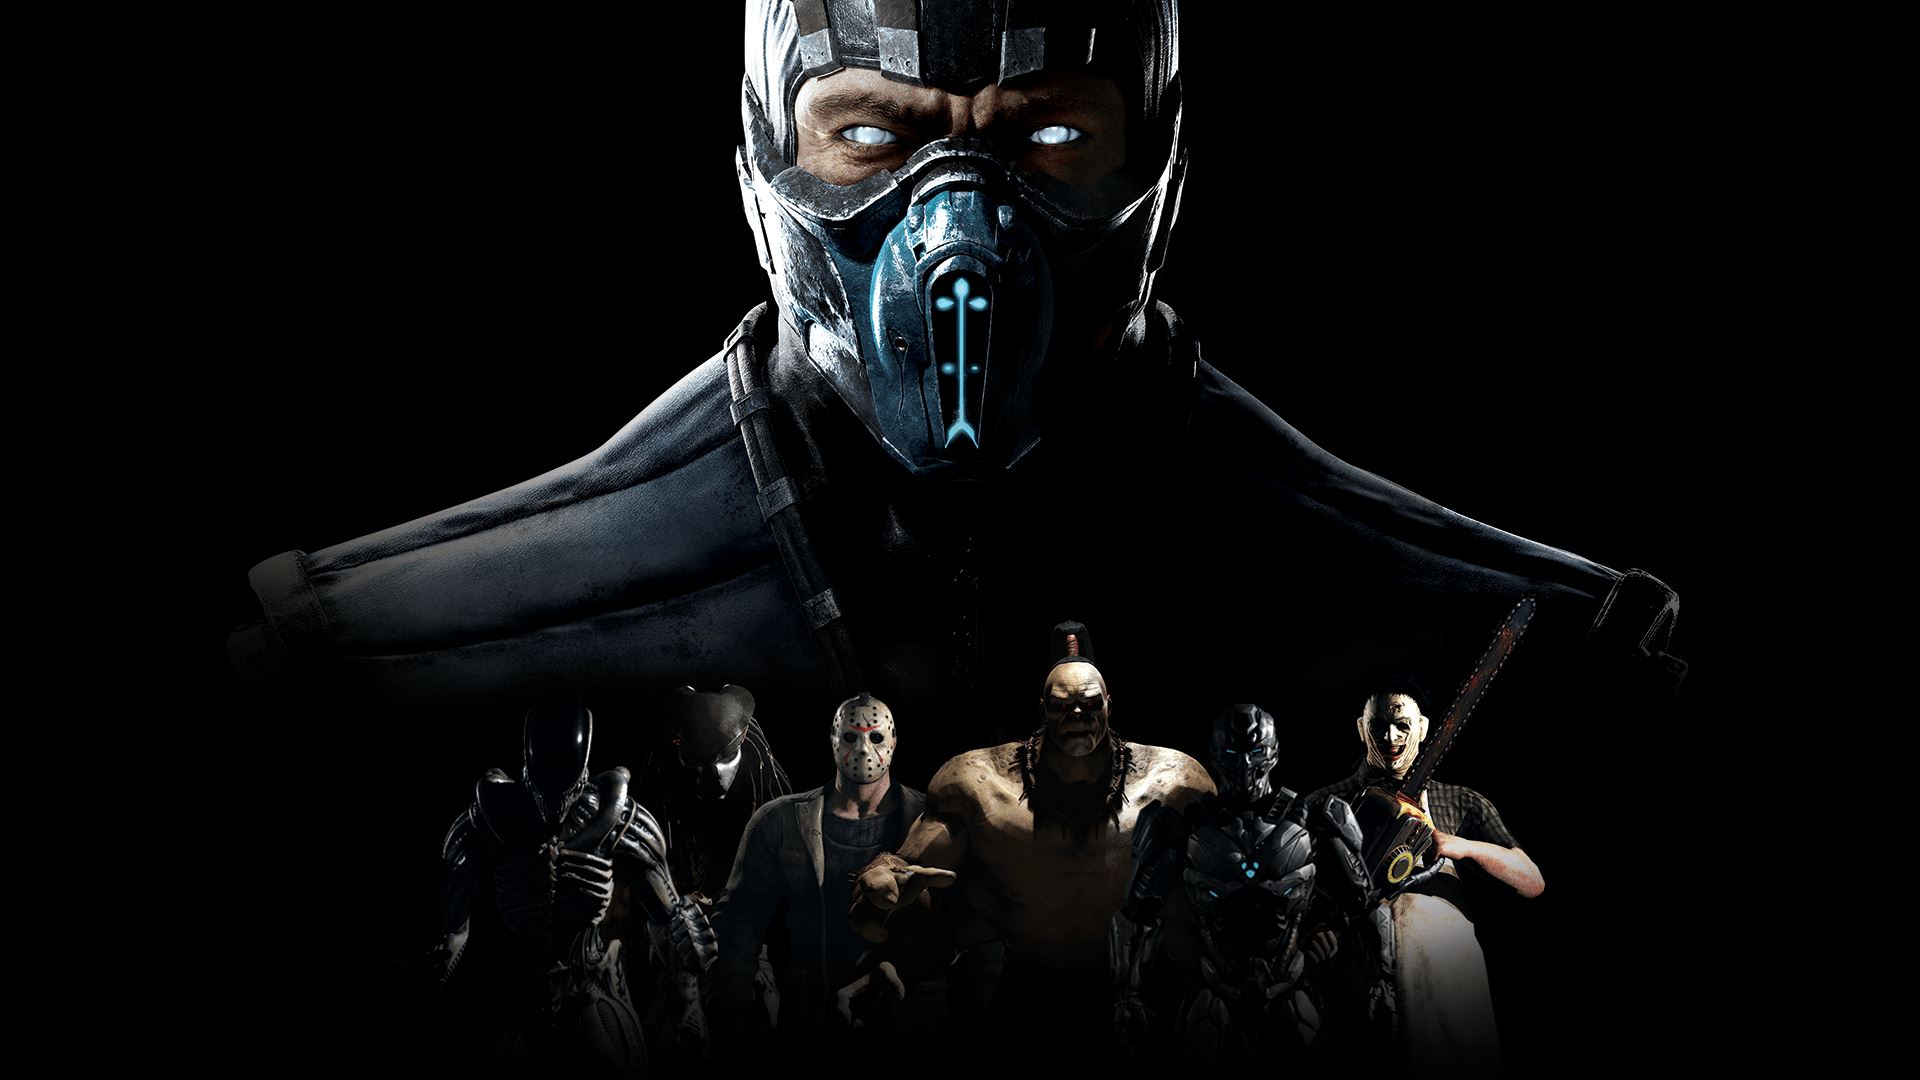 Mortal Kombat X HD Wallpaper And Background Image